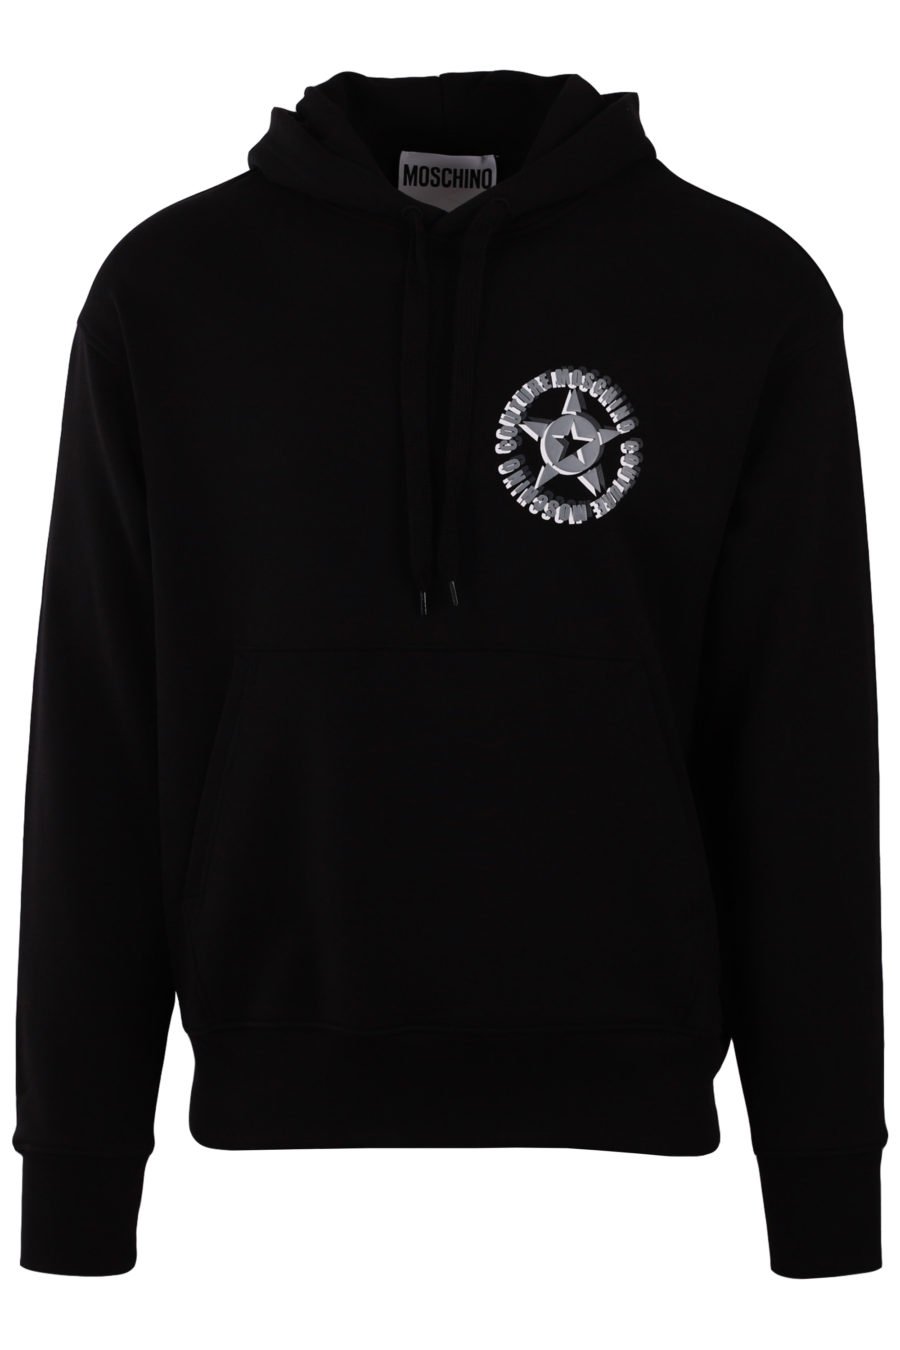 Black hooded sweatshirt with double logo - d94ad491928fb89632ee7c0db6b4276867b3c4b6